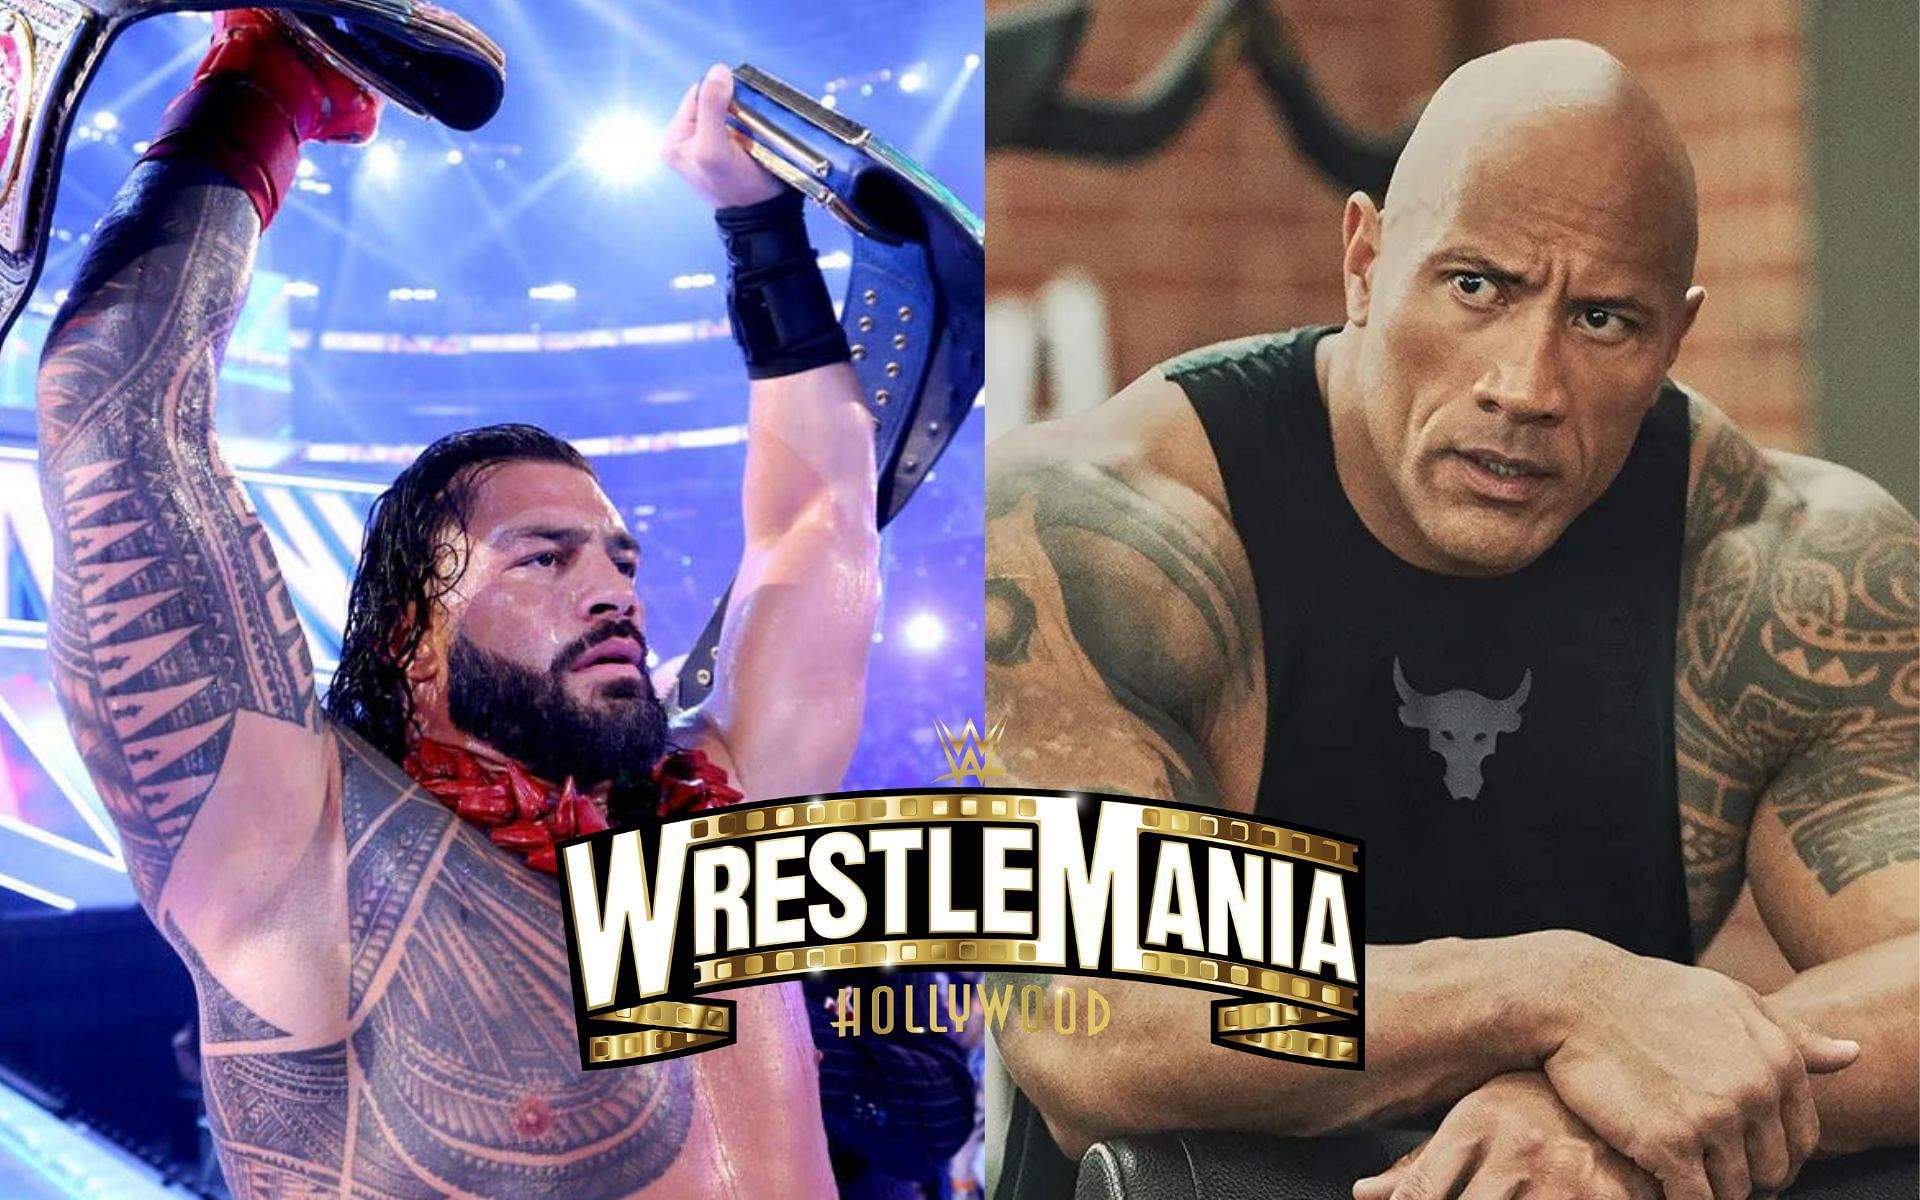 Roman vs. Rock is still the plan for WrestleMania 39.